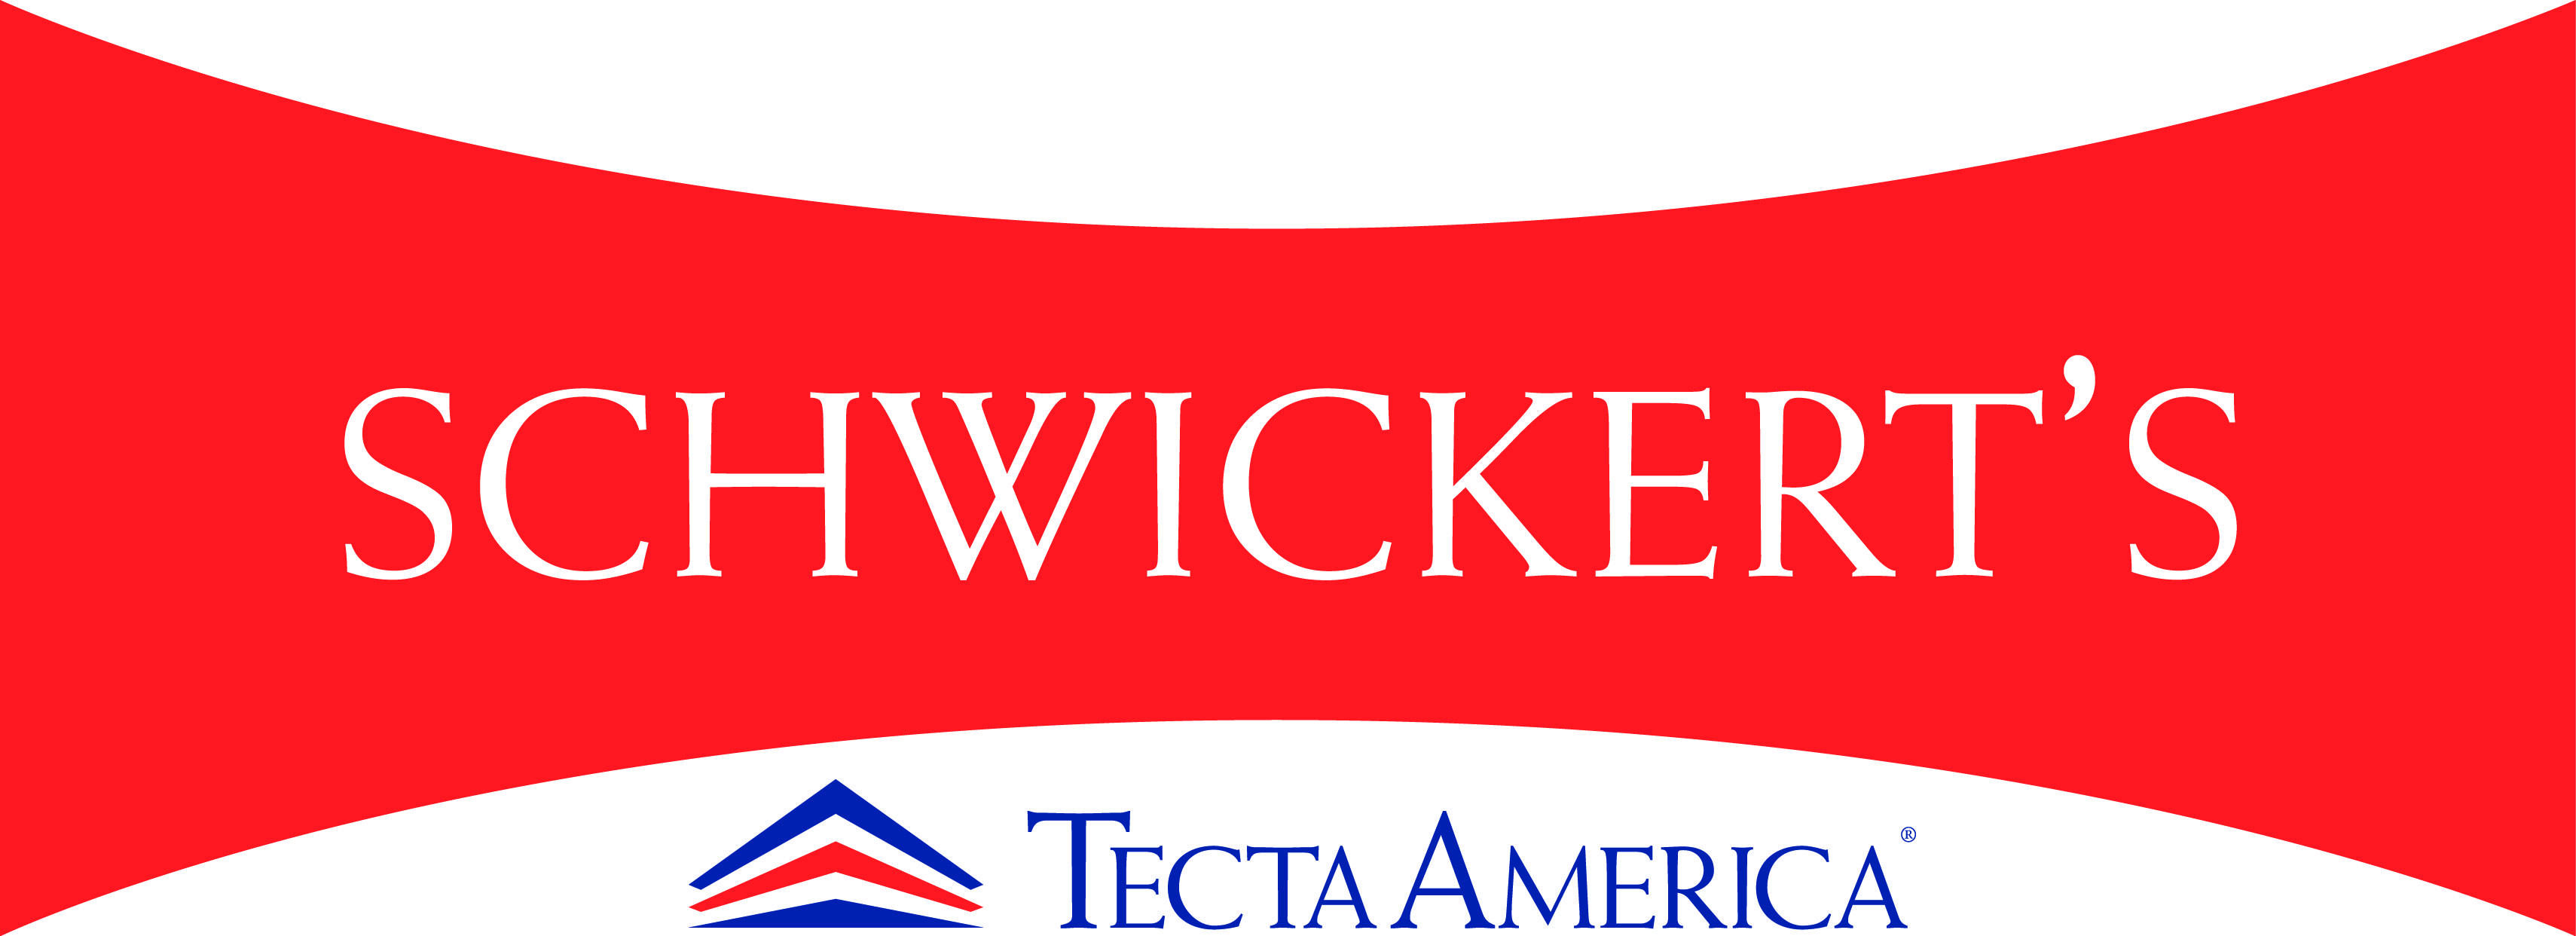 Schwickert's Tecta America - Rochester Metro